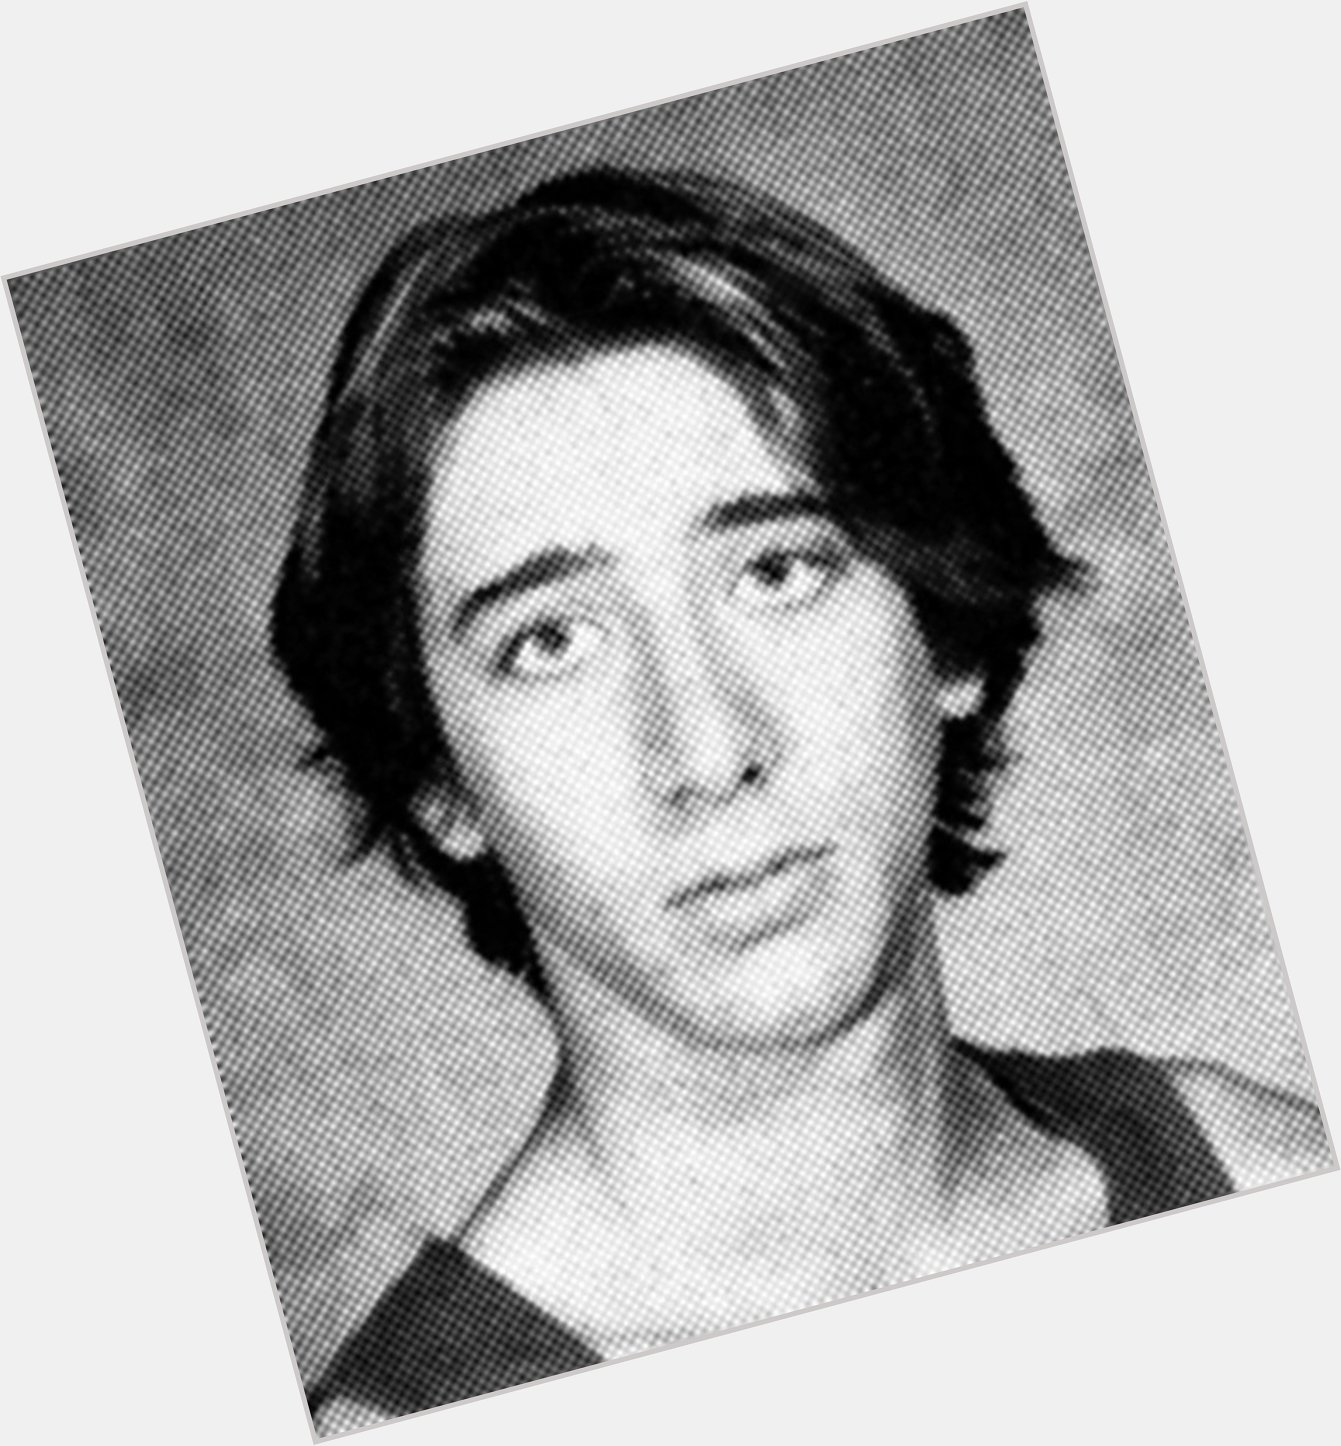 Happy Birthday to Nicolas Cage. 